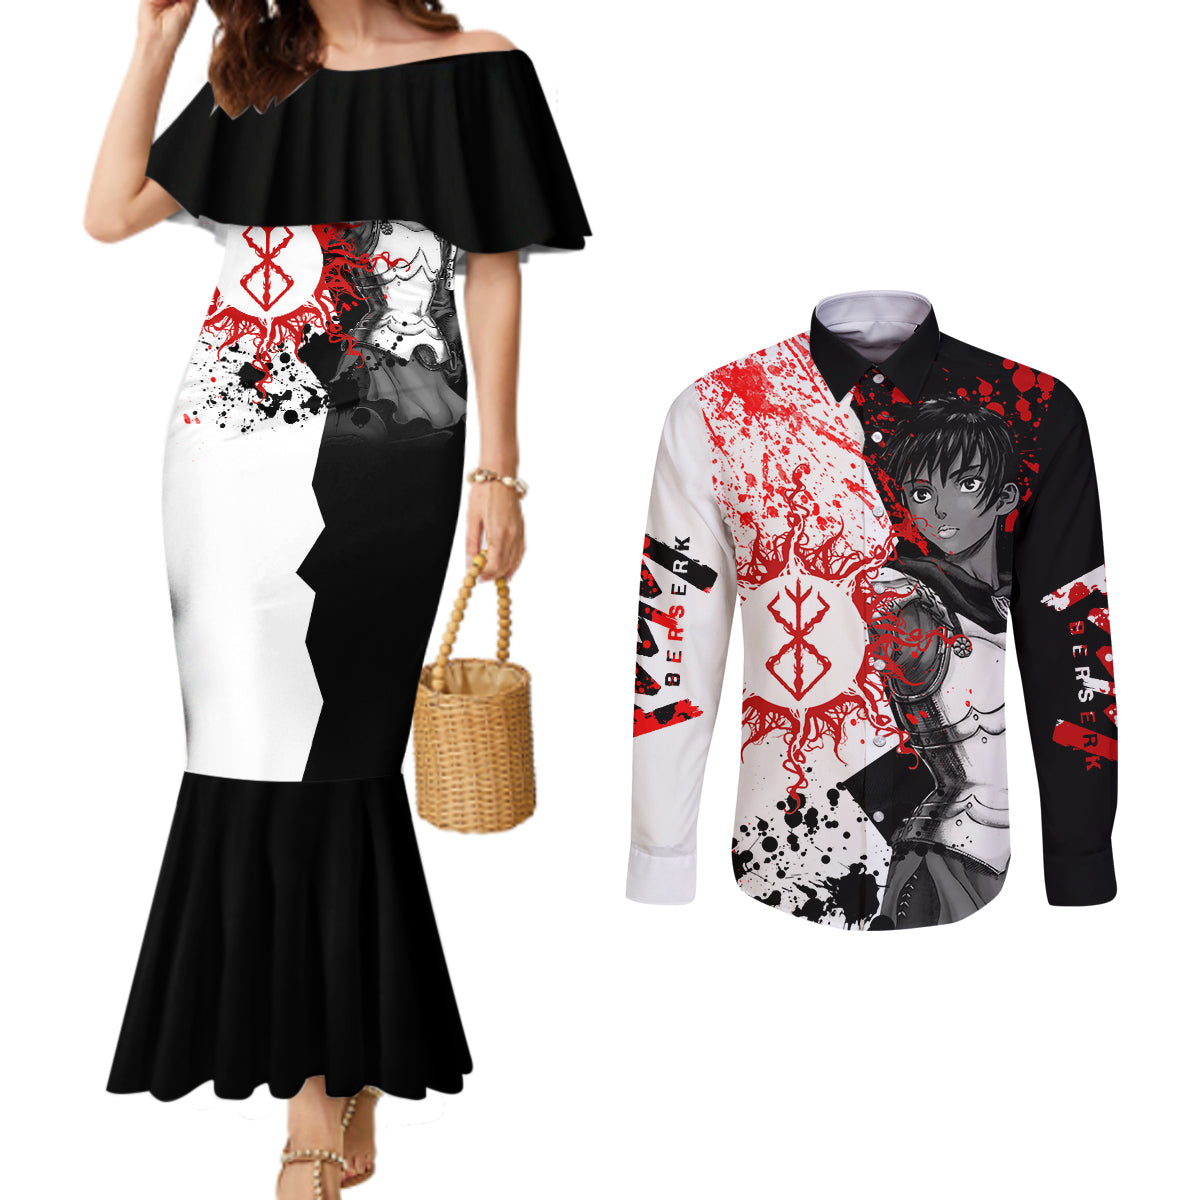 Casca Berserk Couples Matching Mermaid Dress and Long Sleeve Button Shirt Grunge Blood Style